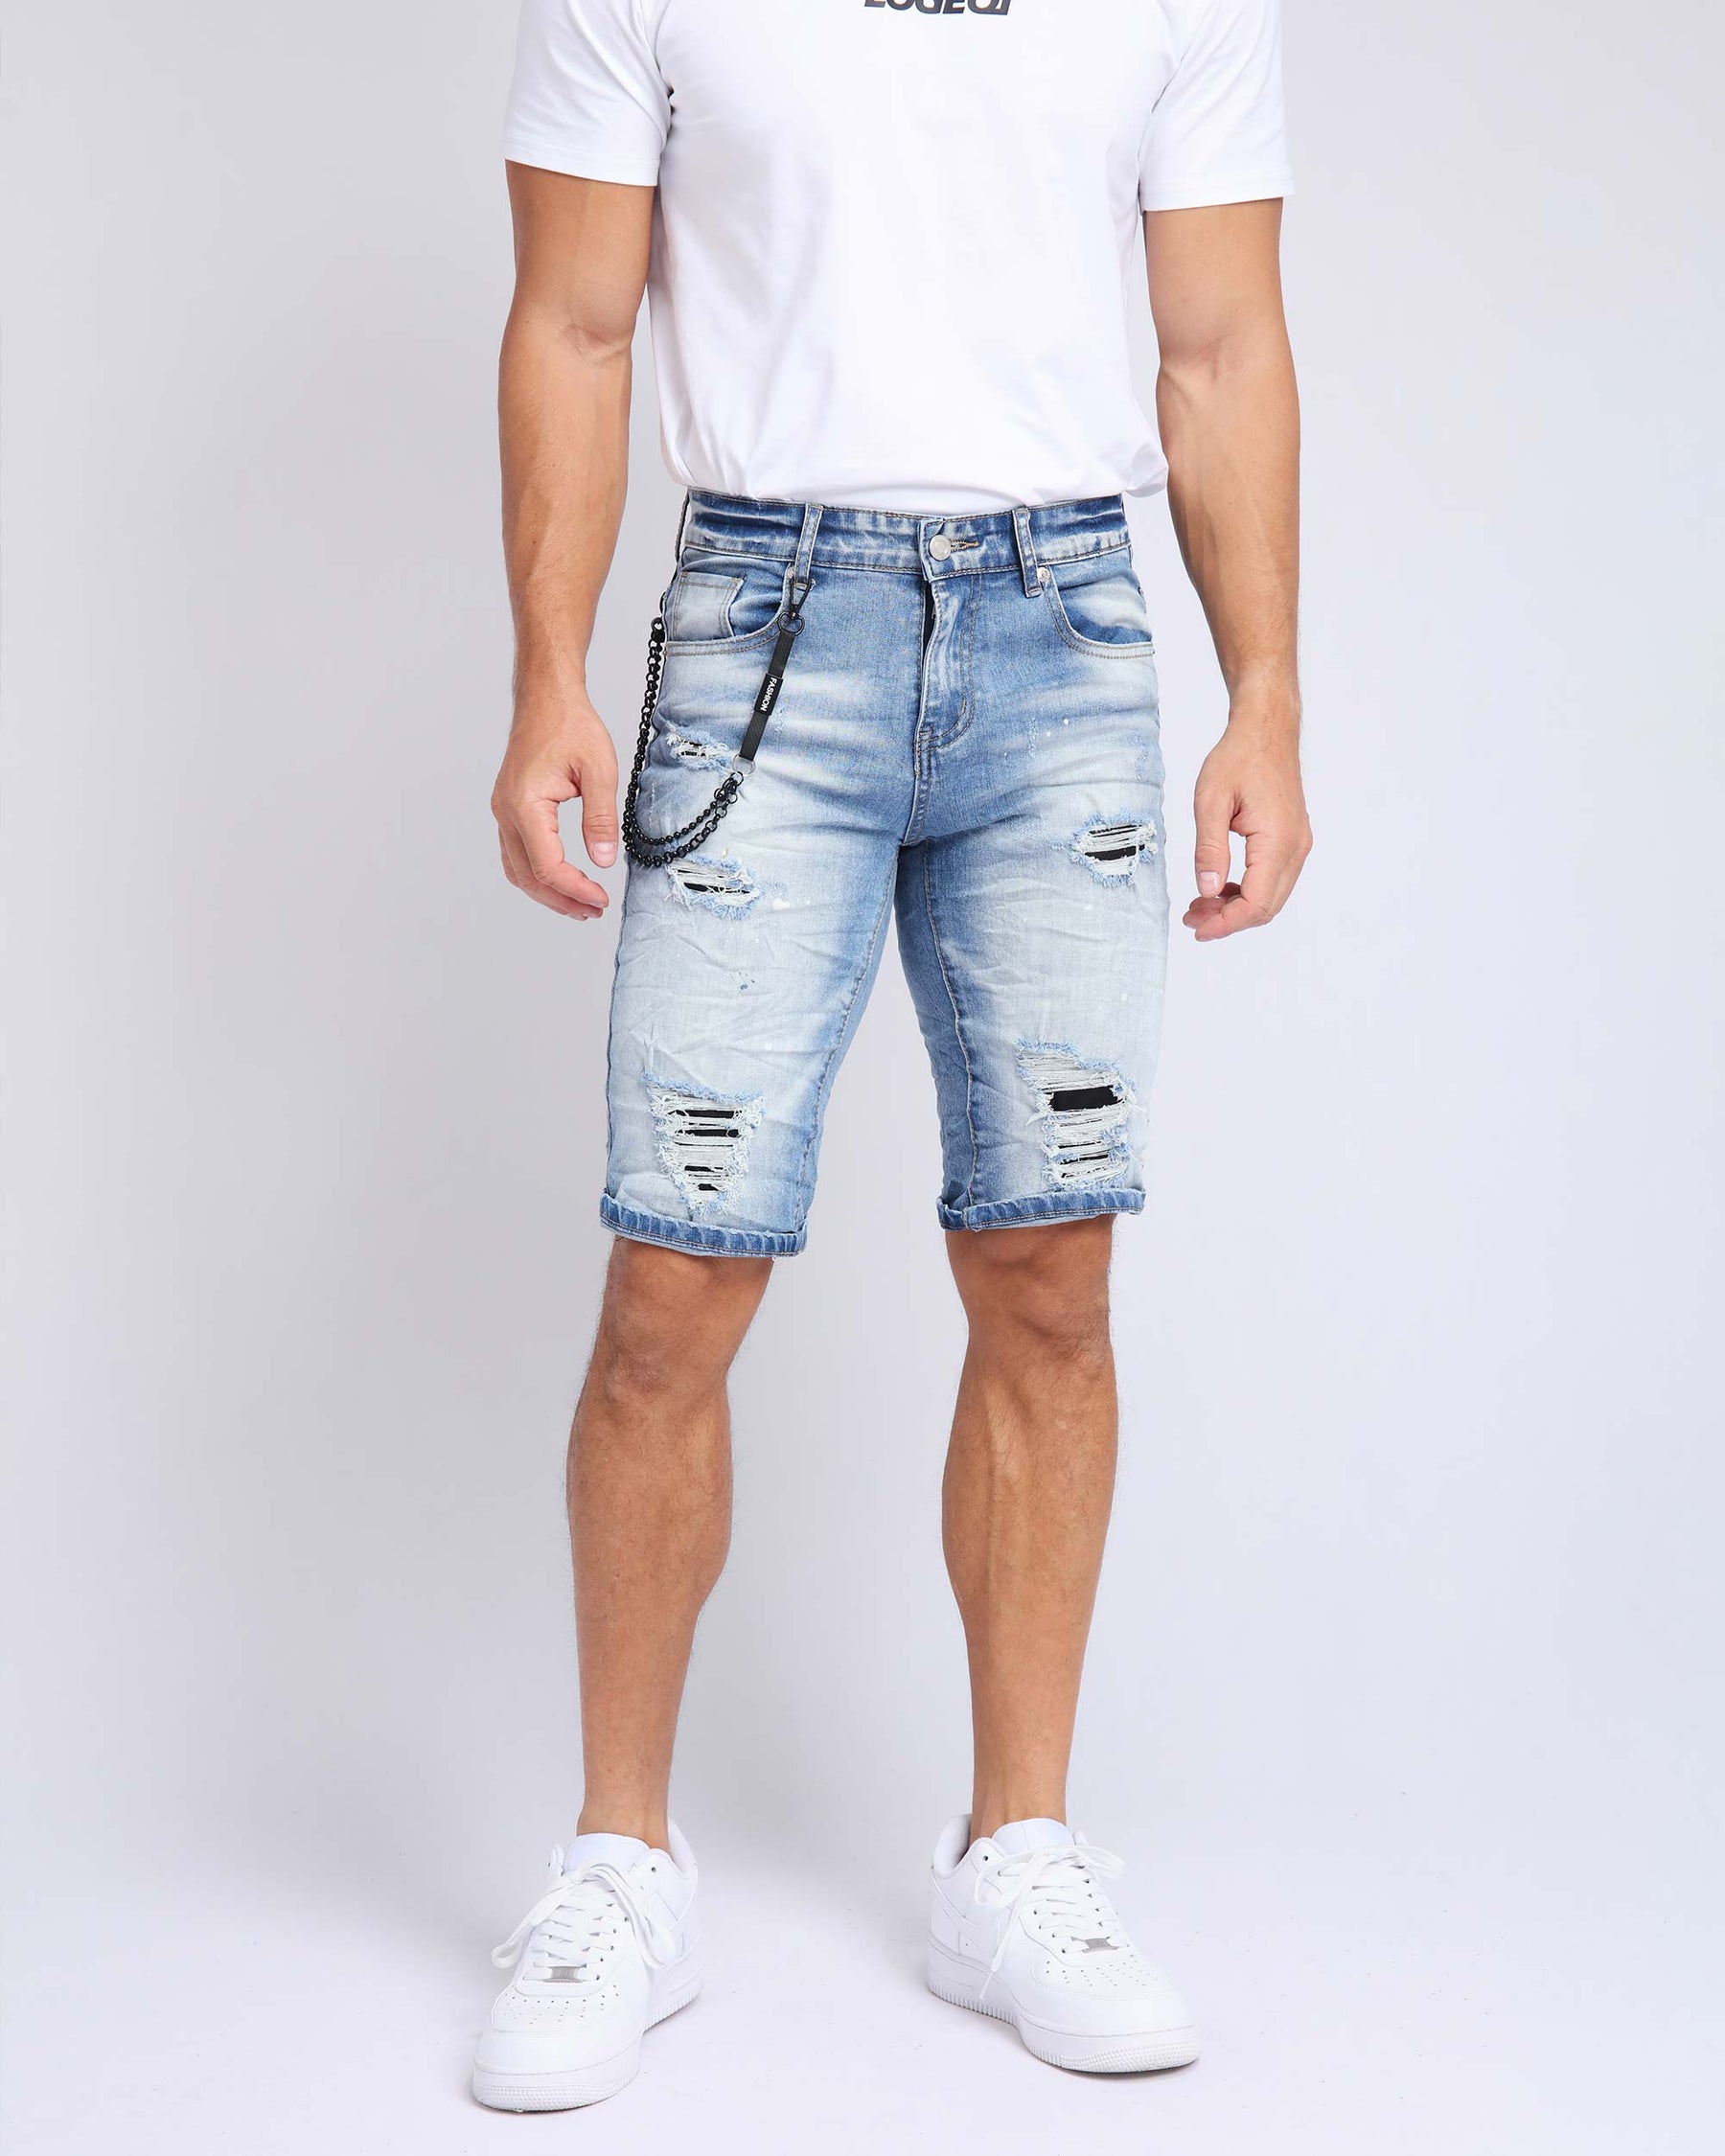 Denim shorts Slim fit - Denim blue - Men | H&M IN